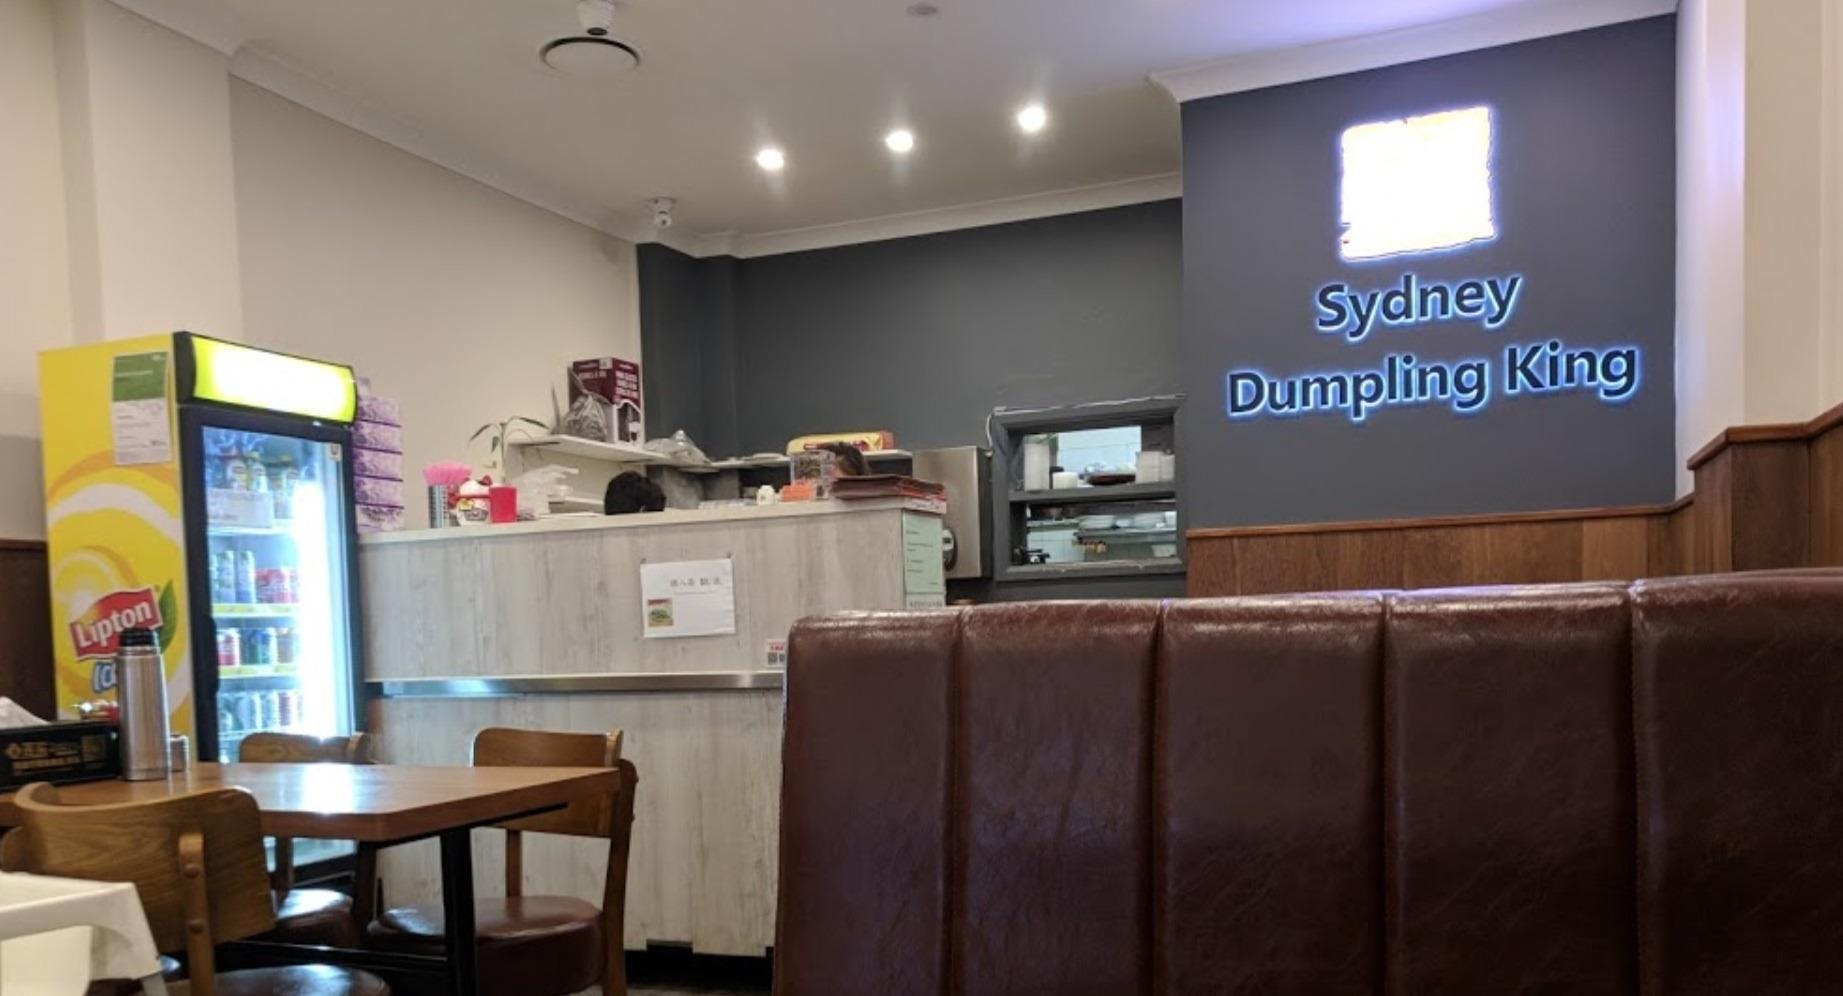 Photo of restaurant Sydney Dumpling King - Burwood in Burwood, Sydney